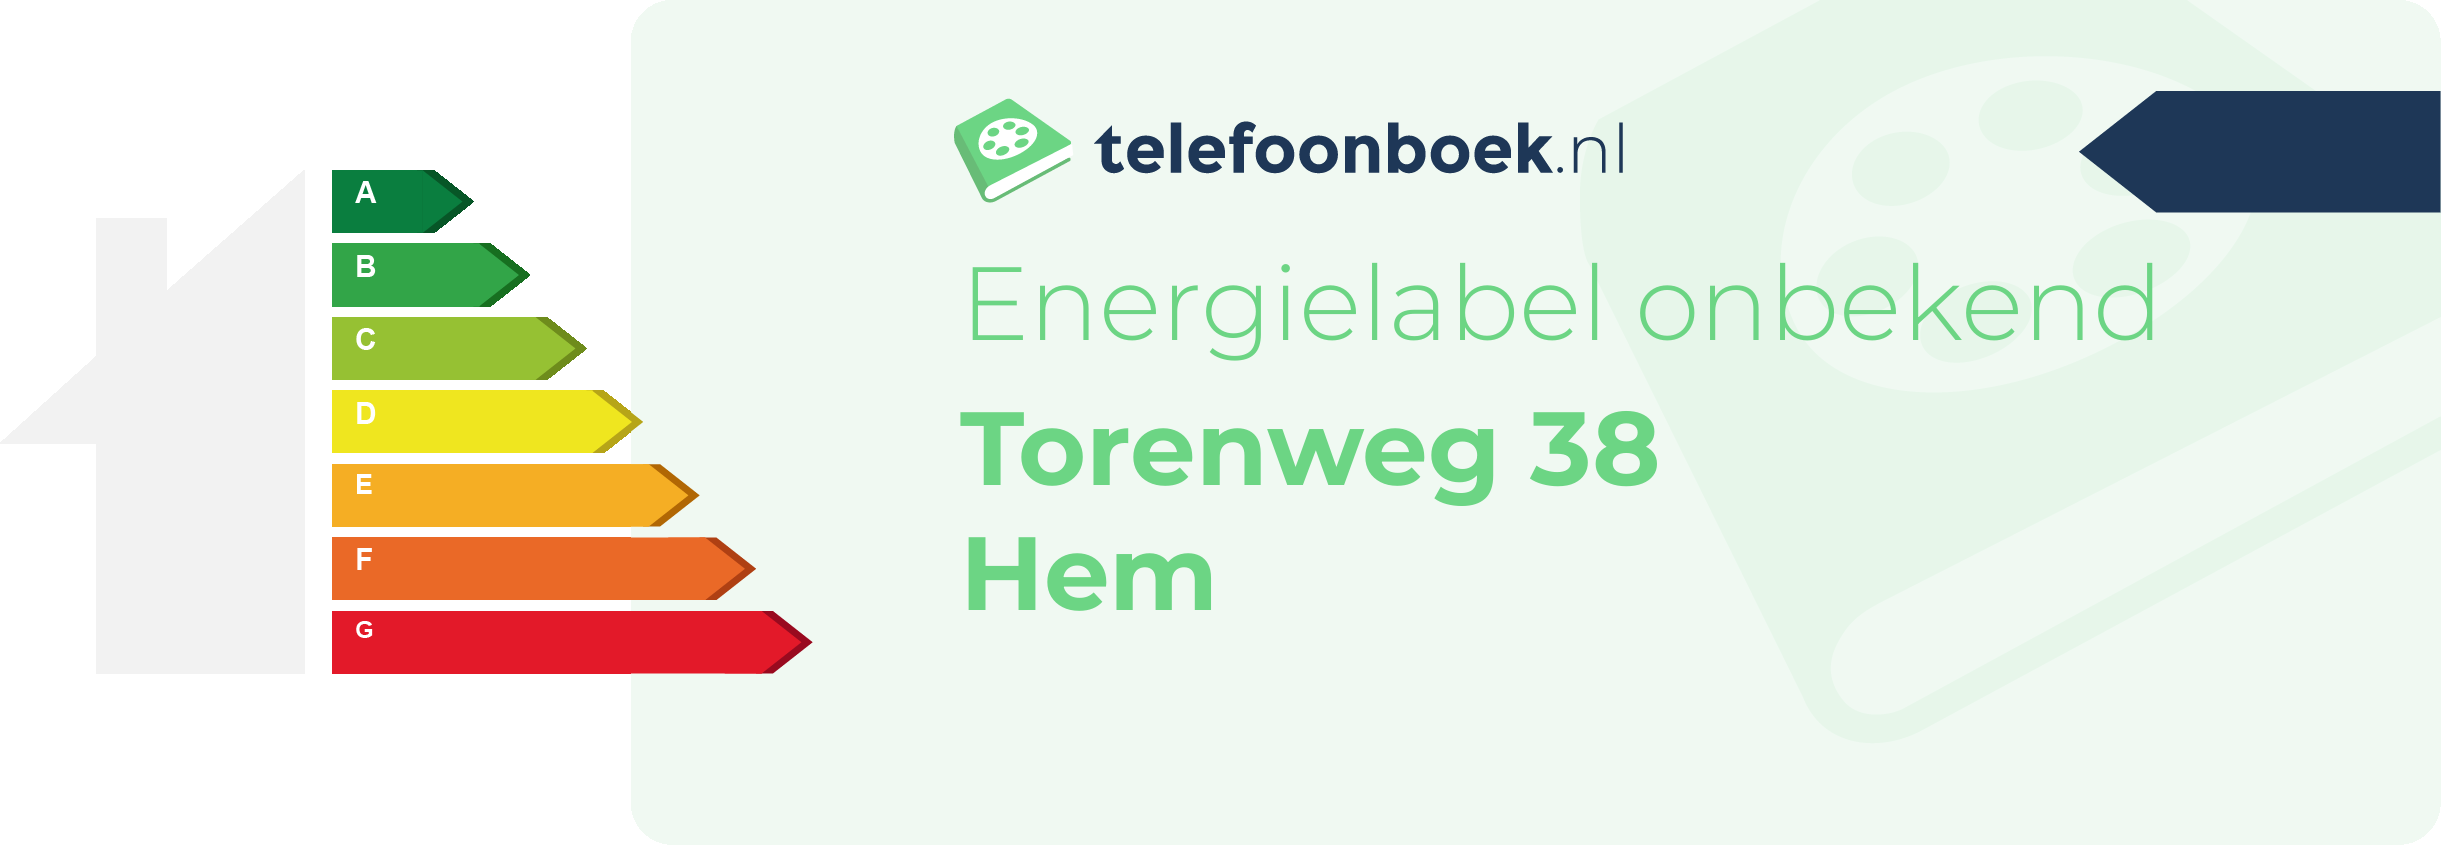 Energielabel Torenweg 38 Hem